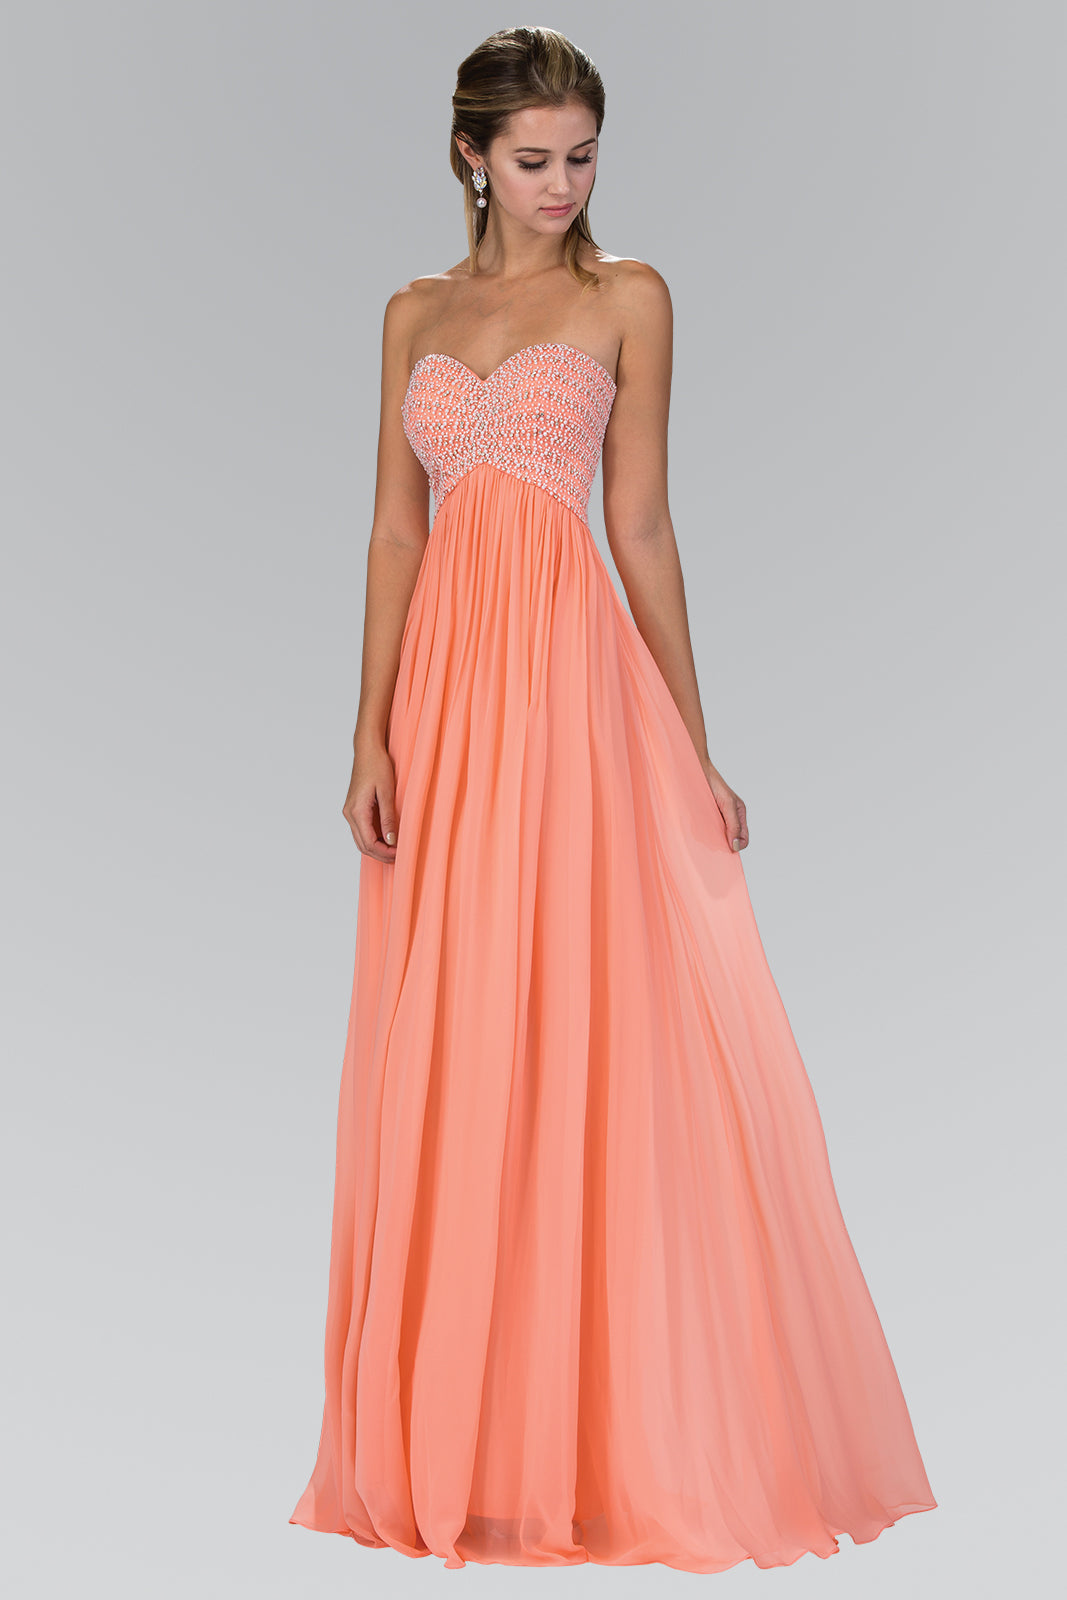 Beaded Bodice Strapless Floor Length Prom Dress GLGL2148 Elsy Style PROM